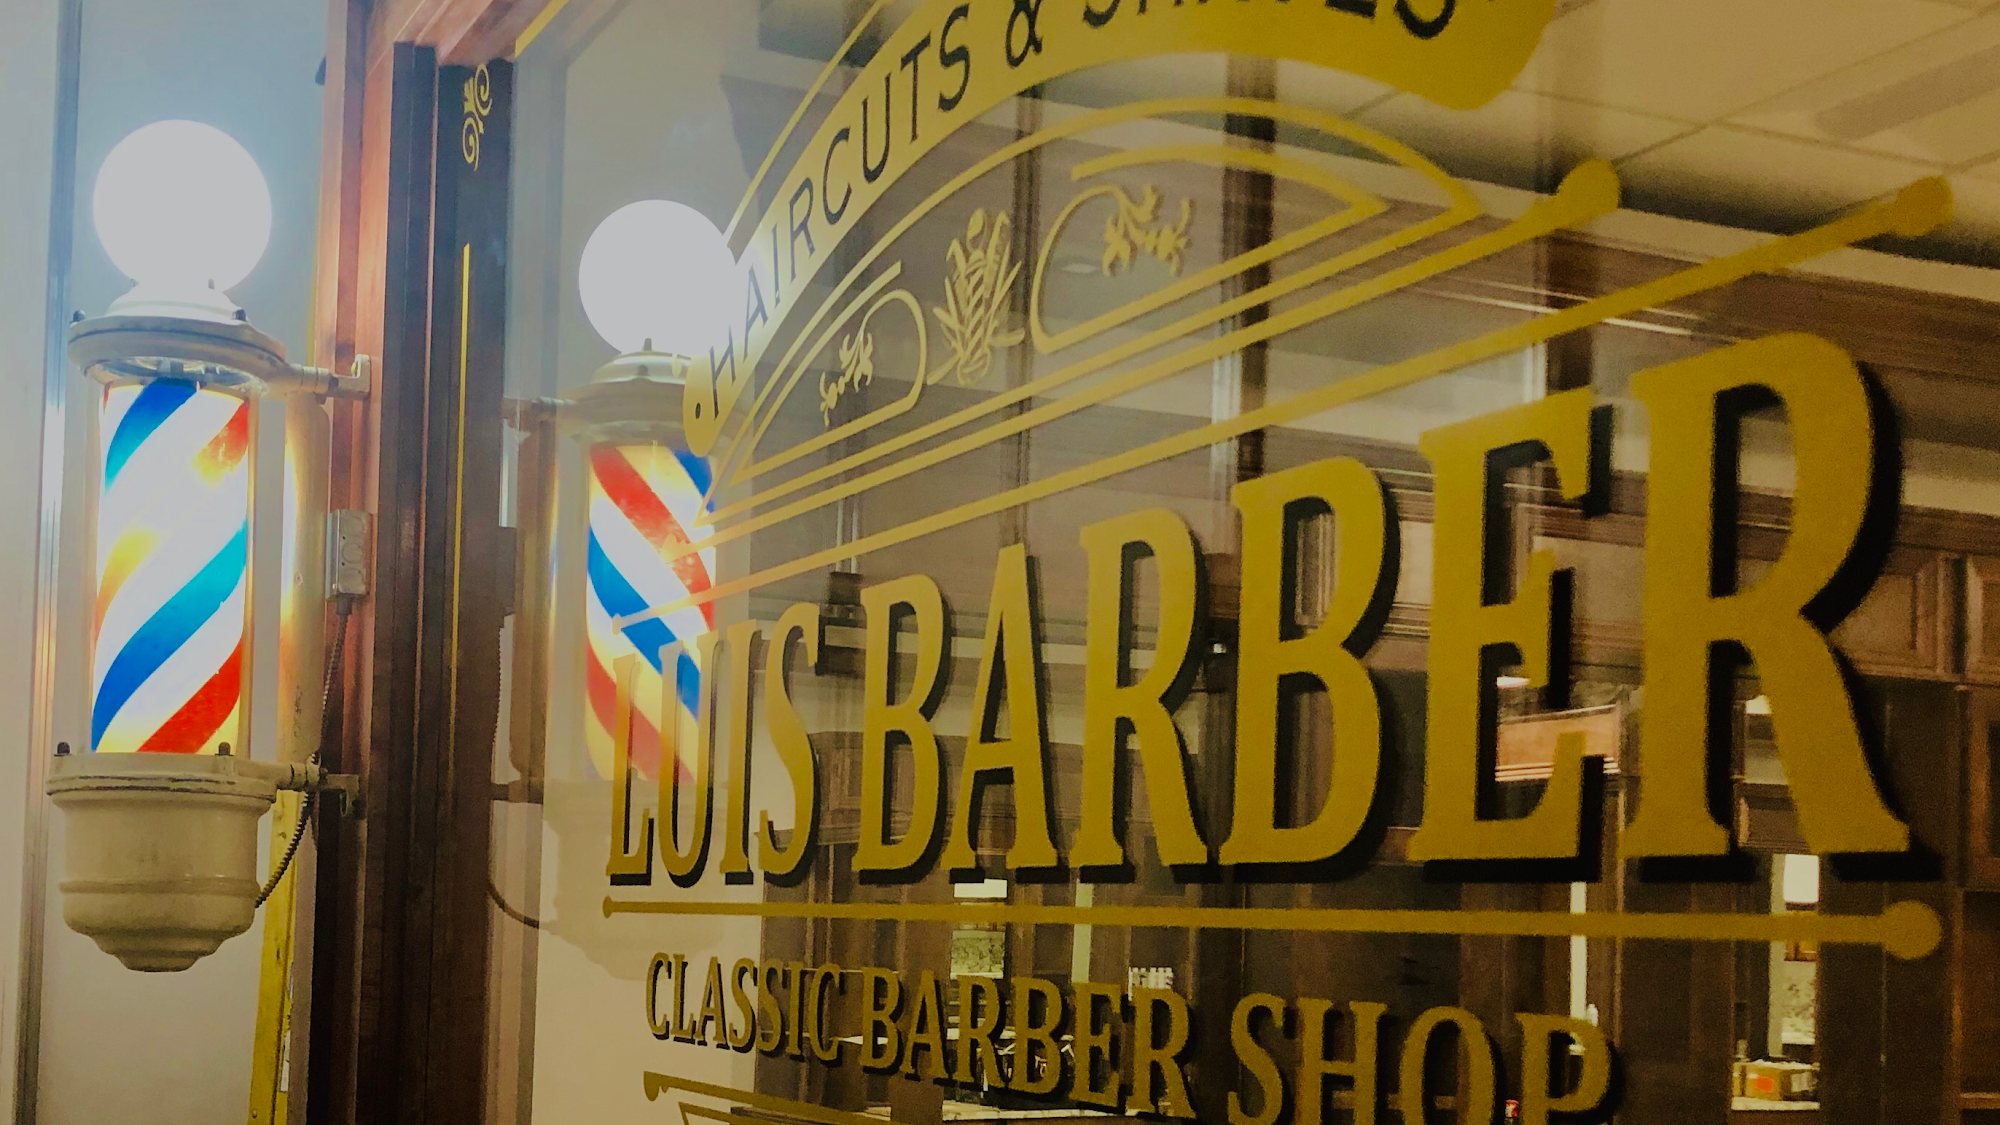 Luis Barber Classic Barbershop